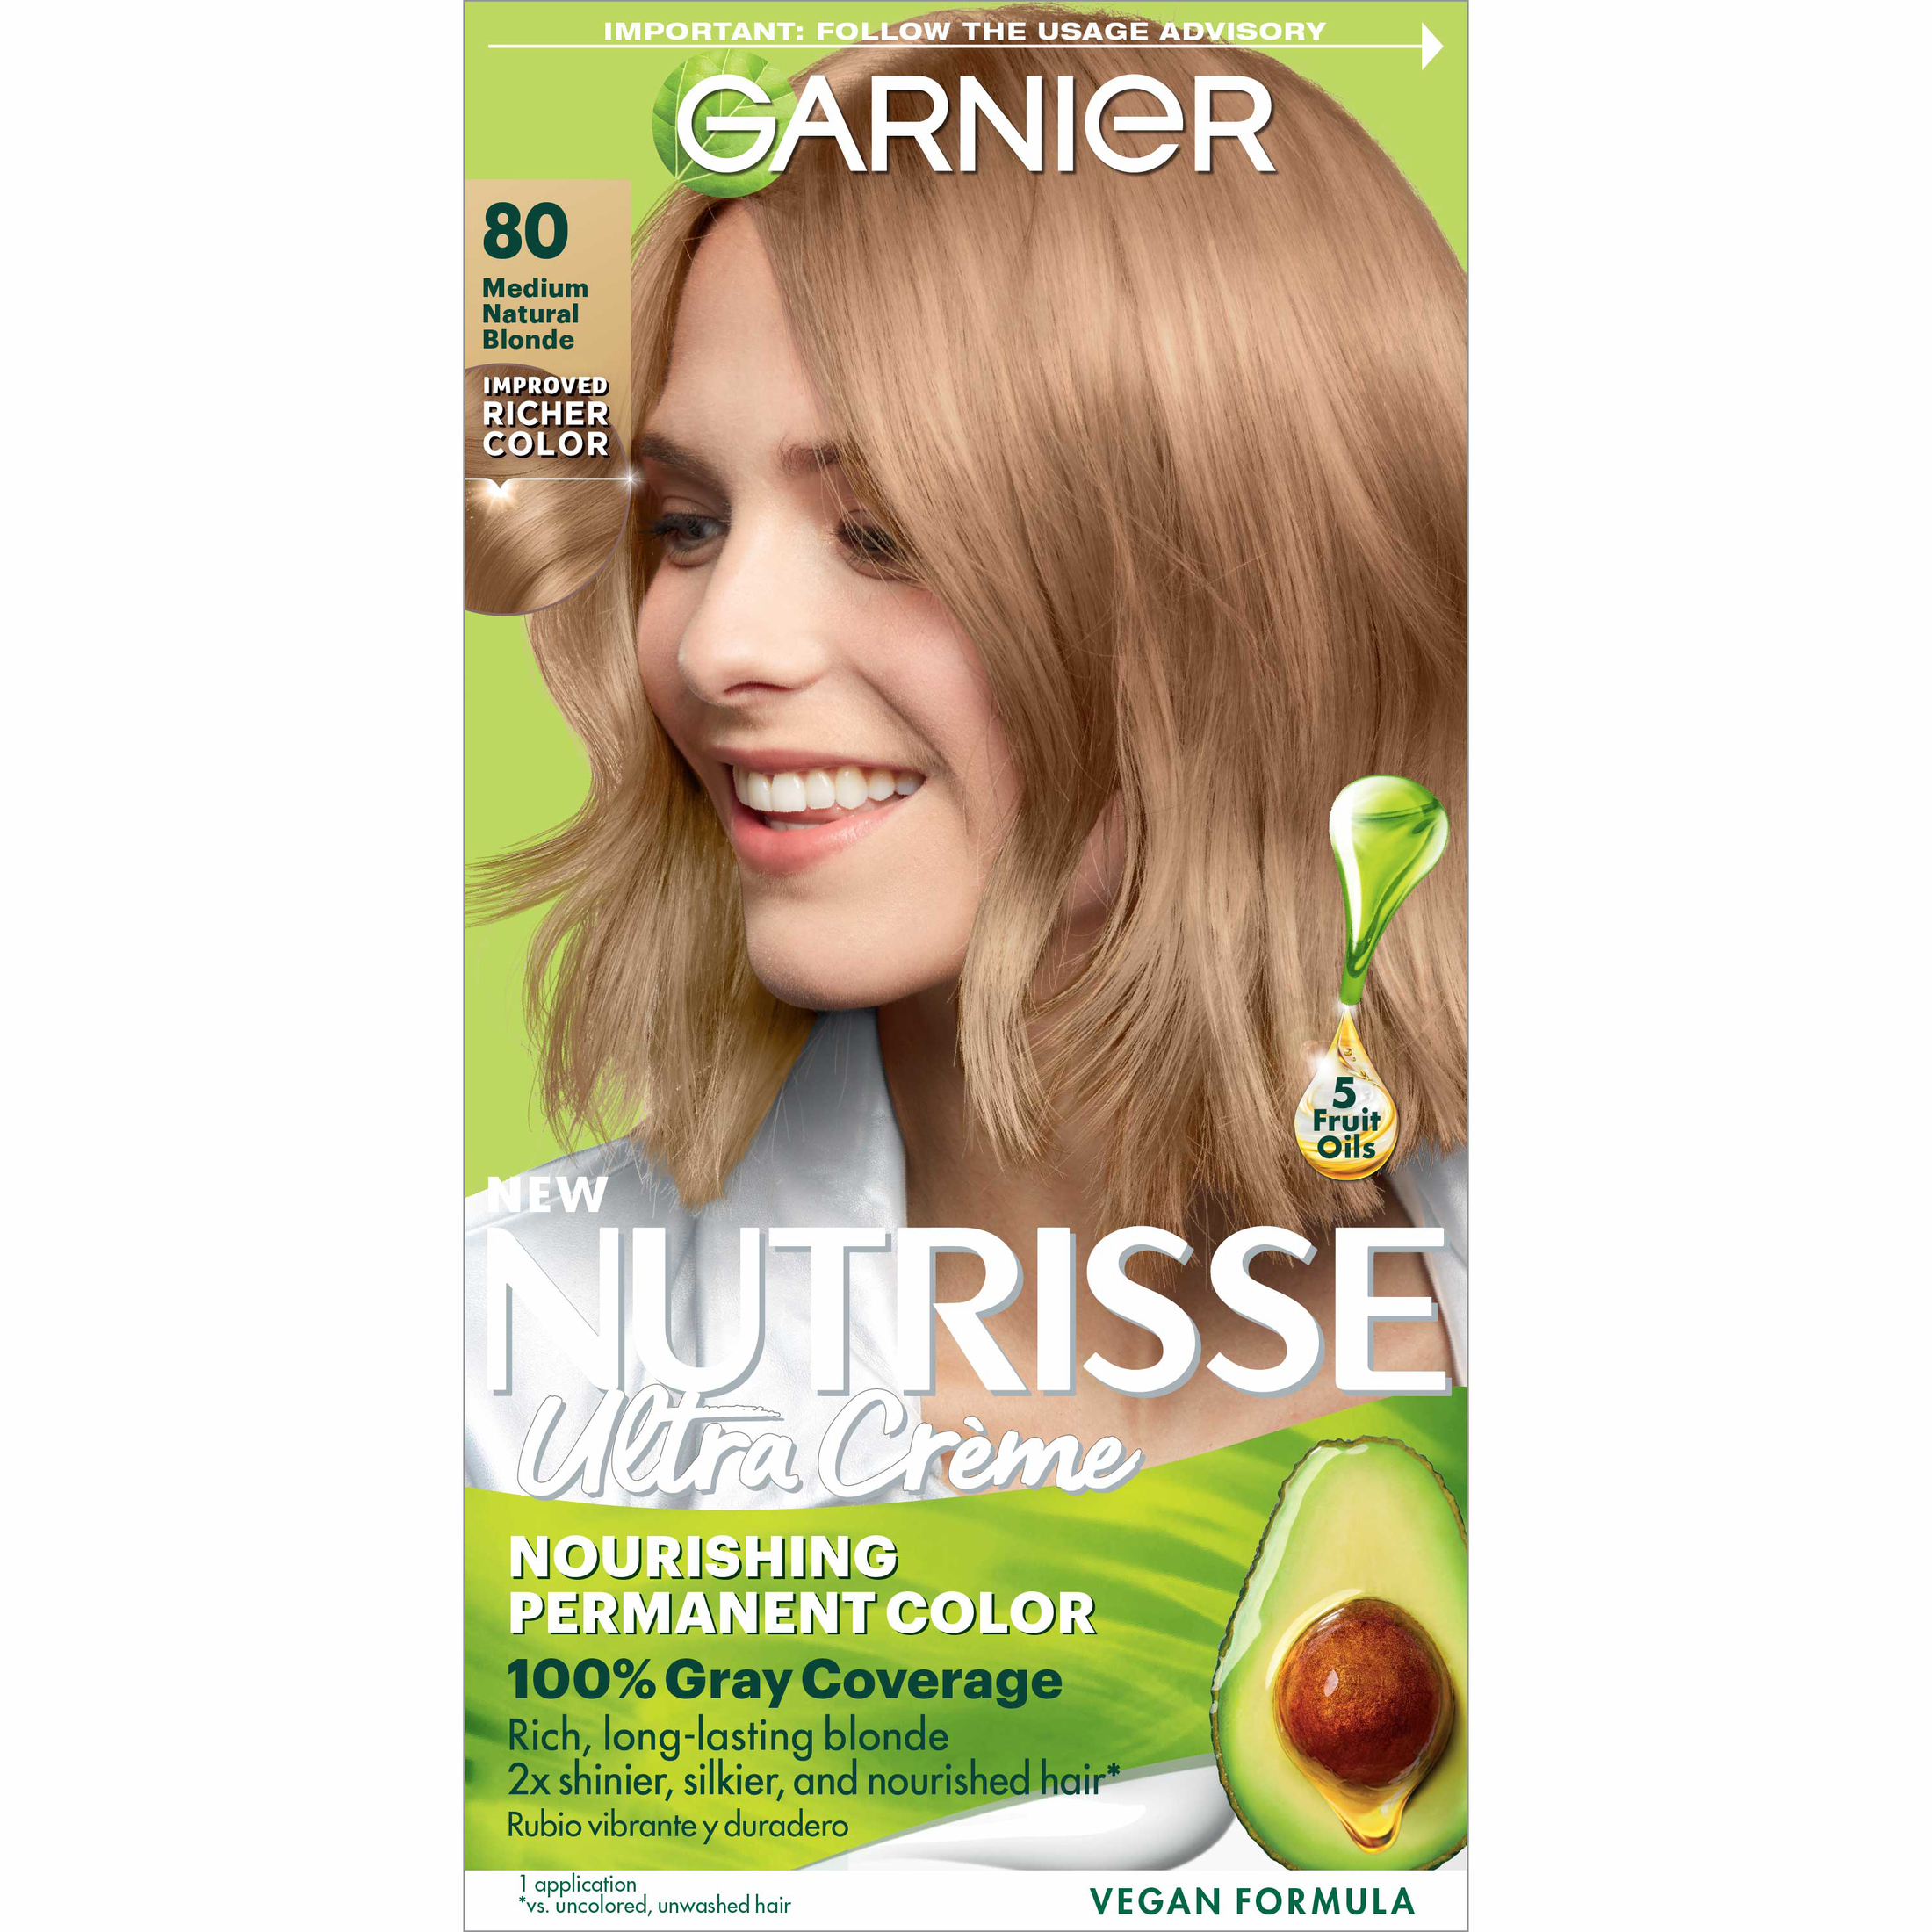 Garnier Nutrisse Nourishing Hair Color Creme, 080 Medium Natural Blonde Butternut - image 1 of 11